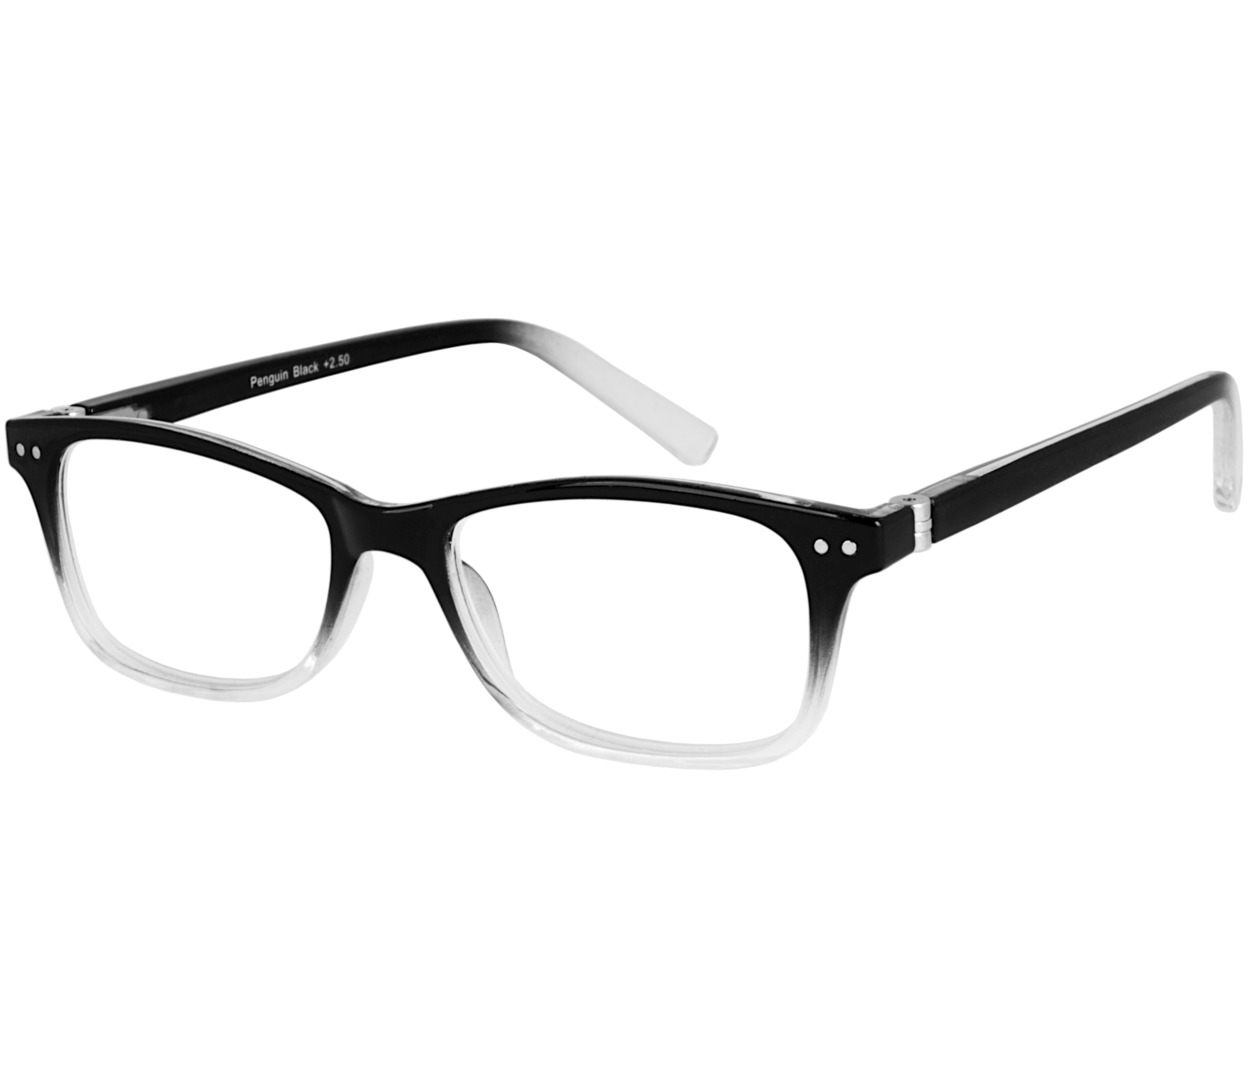 Main Image (Angle) - Penguin (Black) Retro Reading Glasses